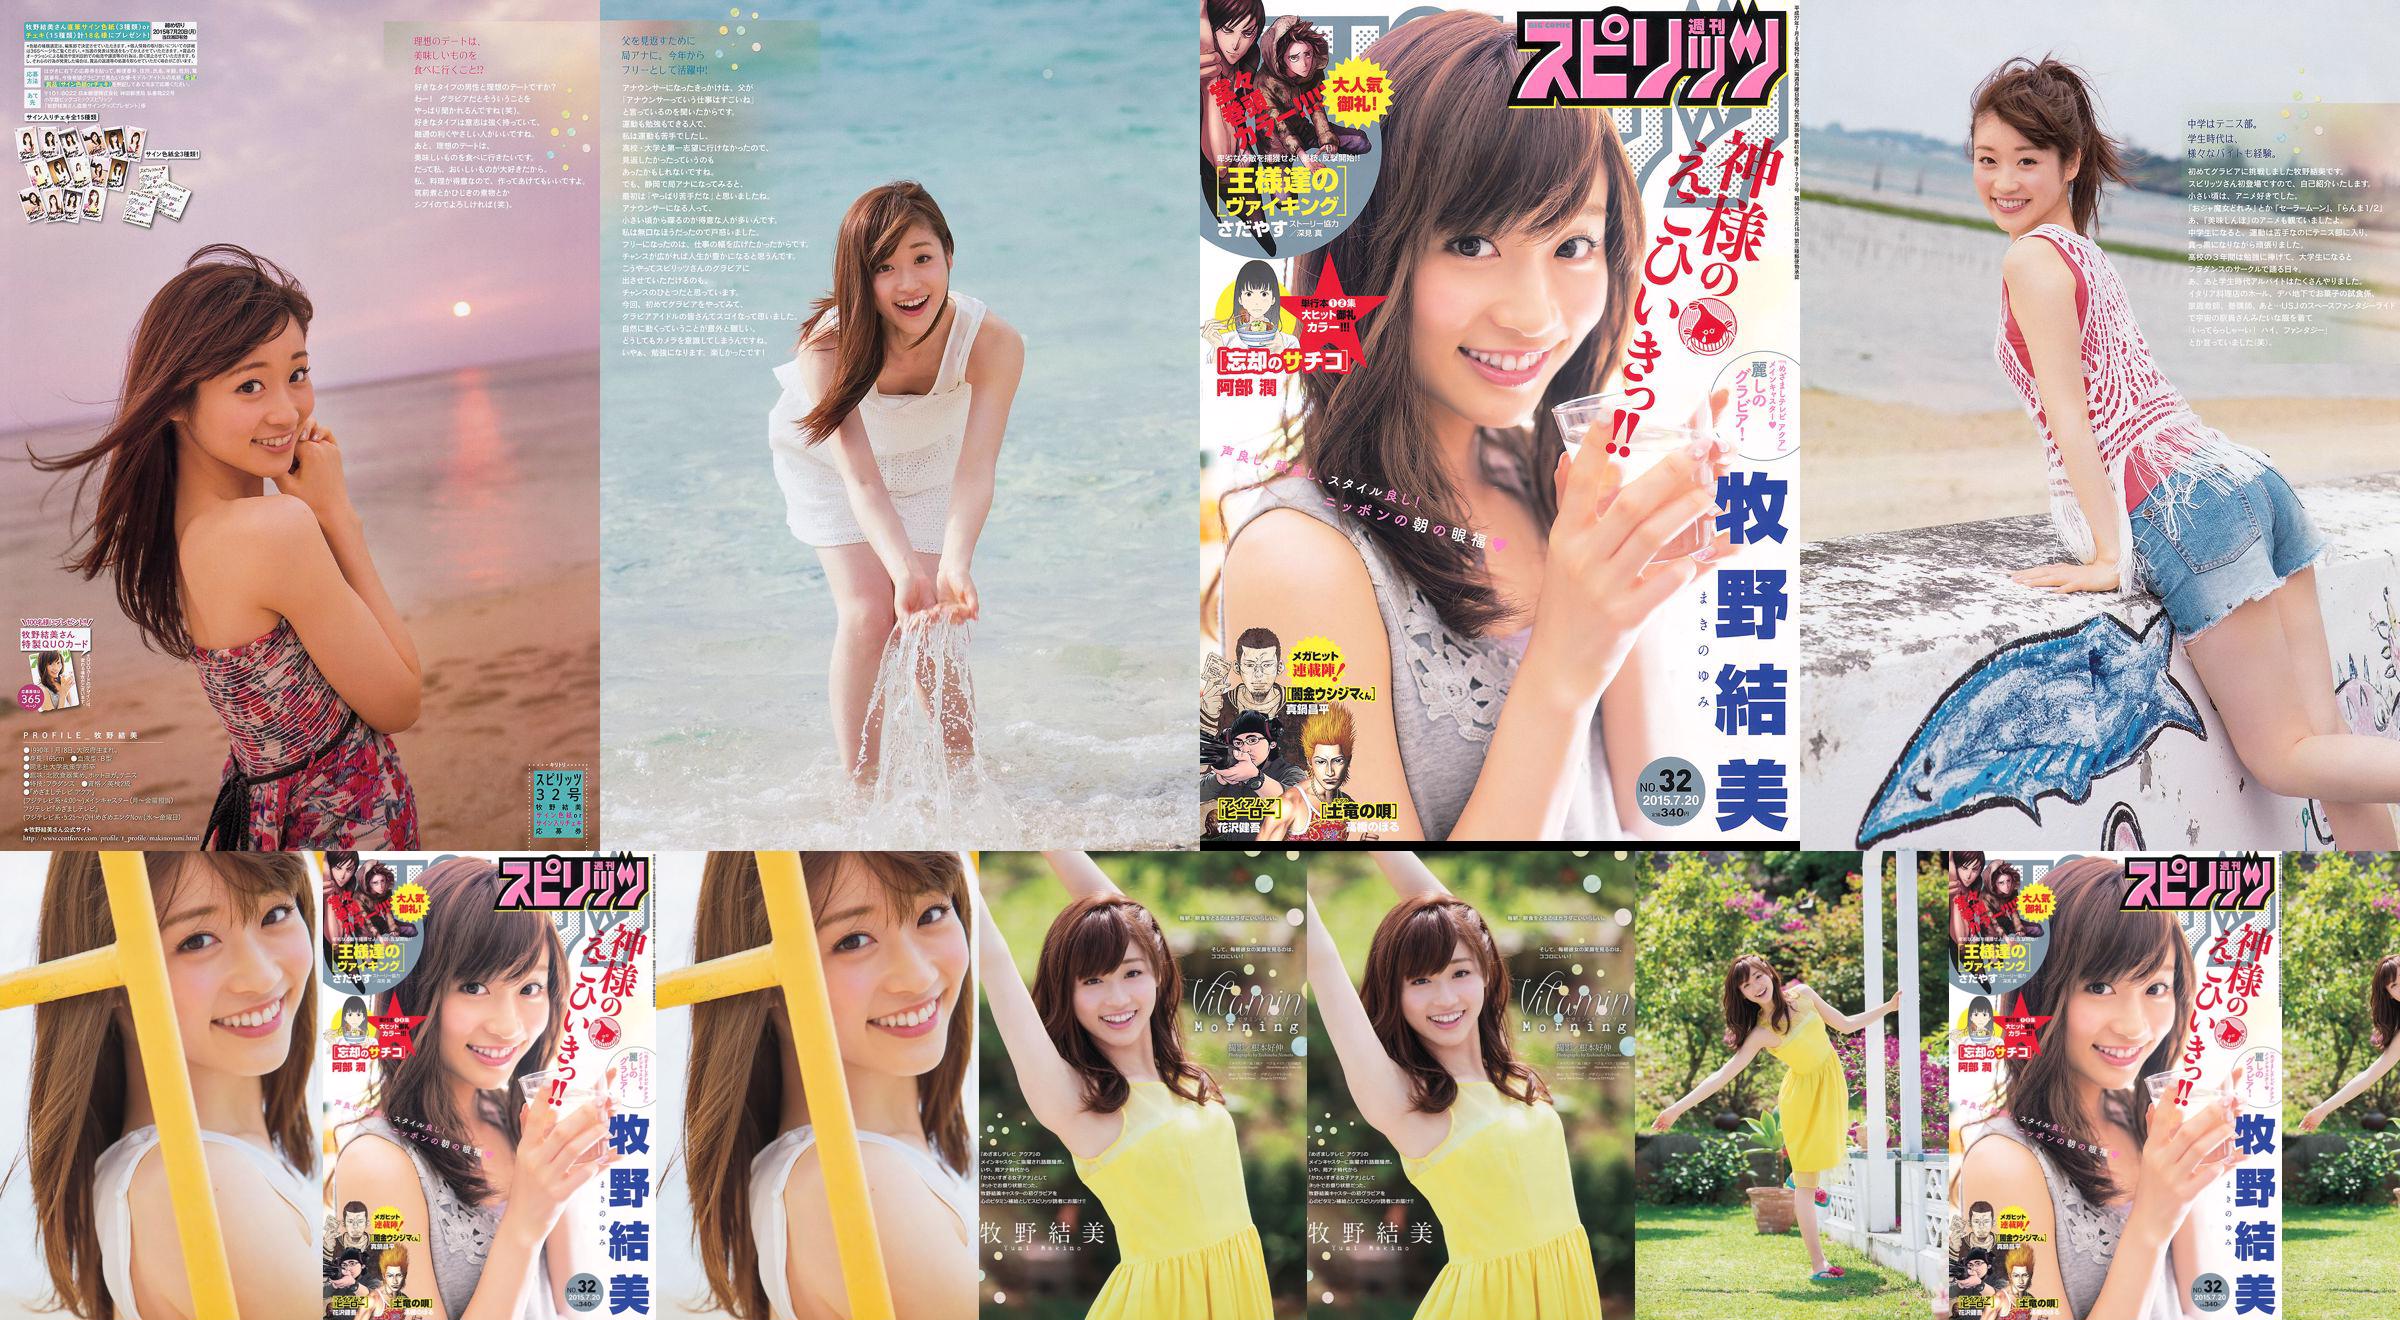 [Grands esprits de la bande dessinée hebdomadaire] Yumi Makino 2015 N ° 32 Photo Magazine No.6d8244 Page 2